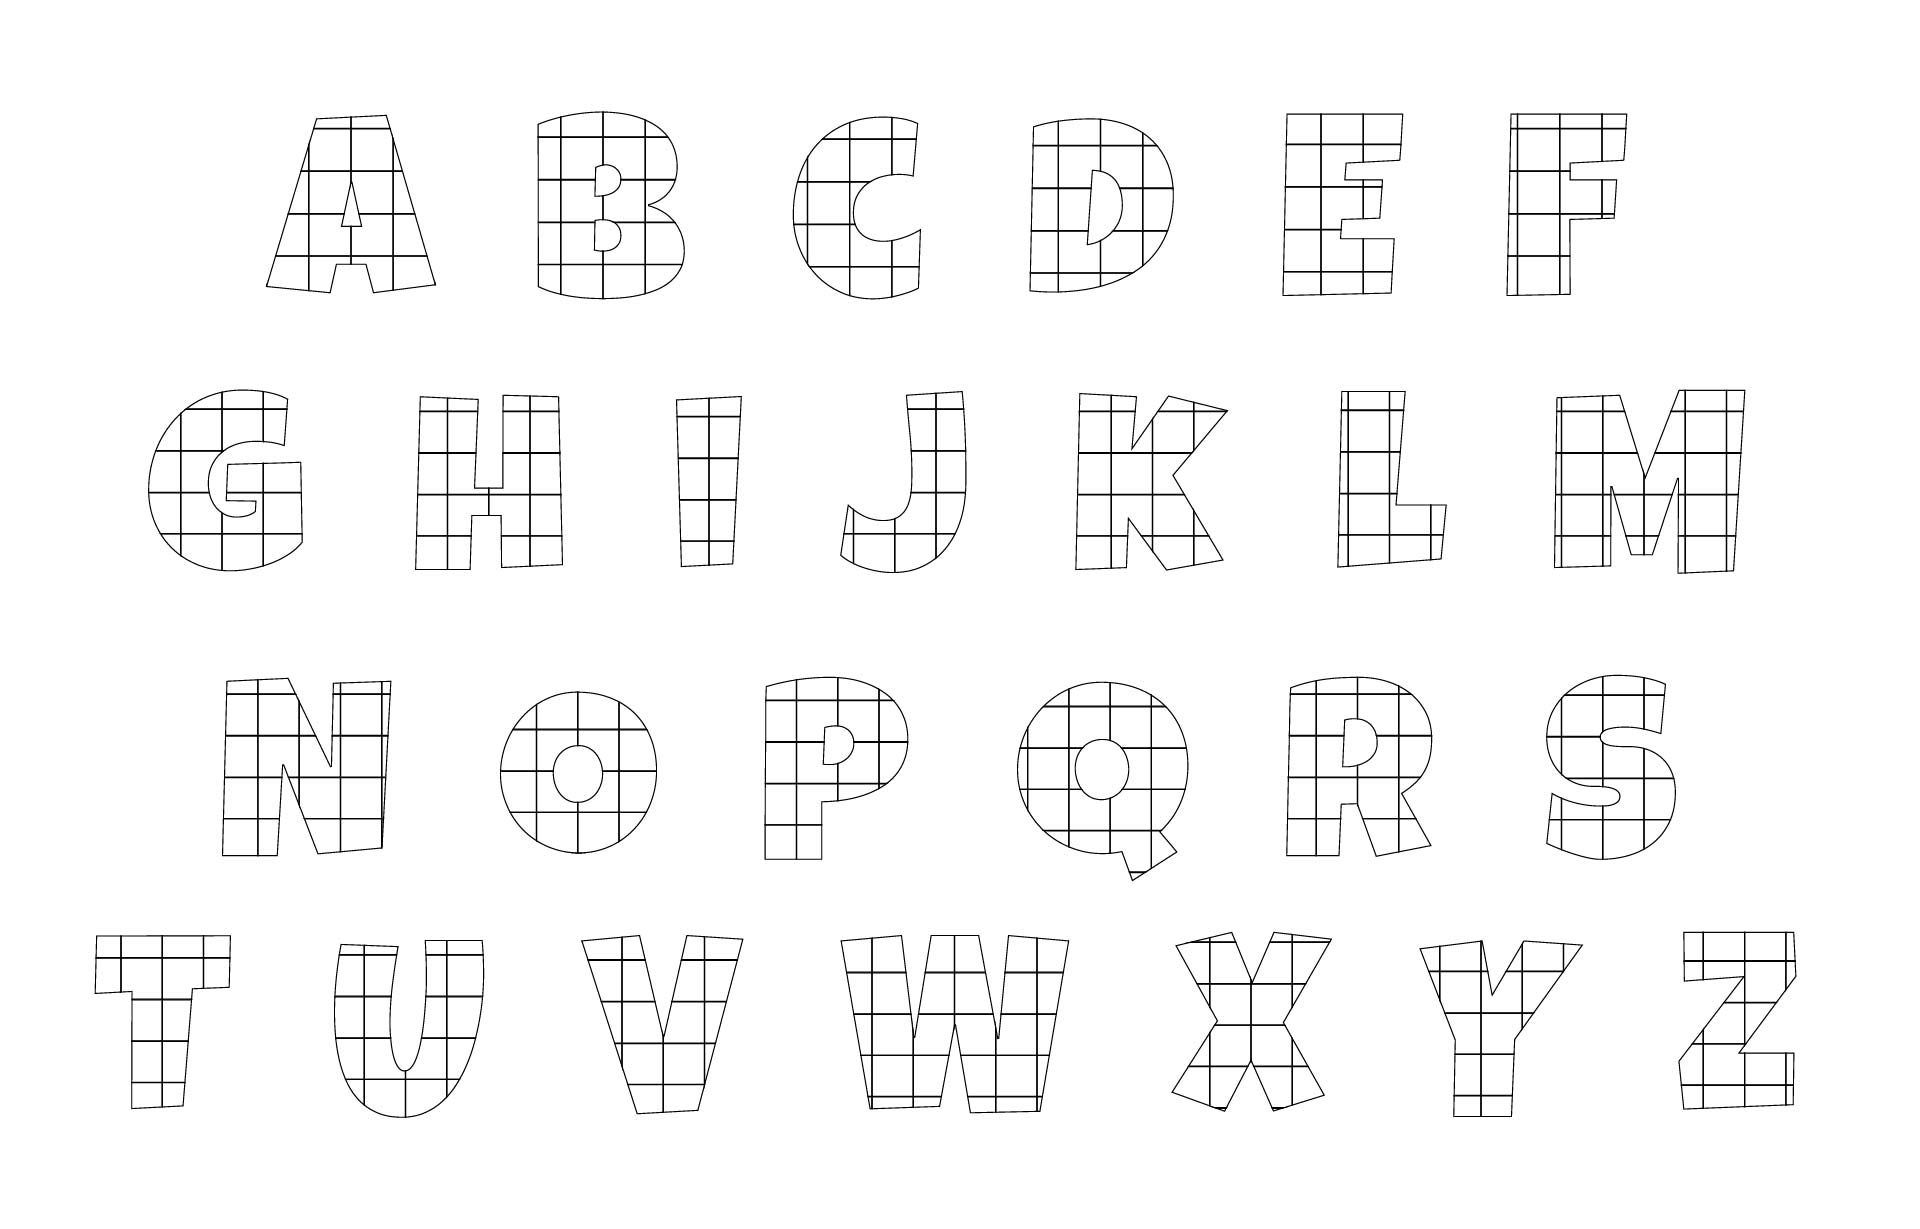 4-best-images-of-printable-alphabet-block-letter-large-size-large